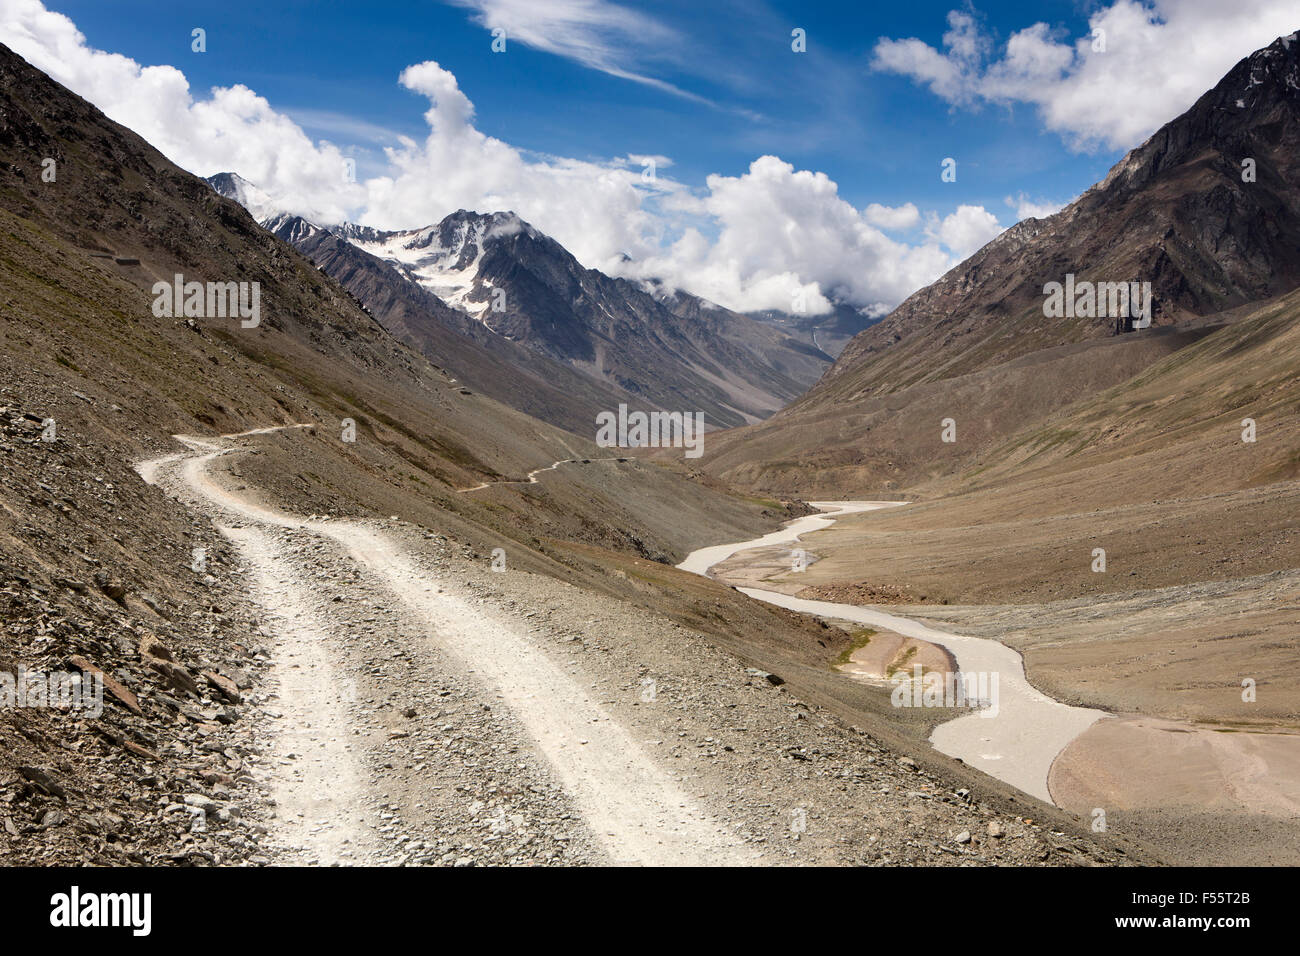 India, Himachal Pradesh, Spiti, Chandra, Taal strada irregolare a Kunzum La passano sopra il fiume Chandra Foto Stock